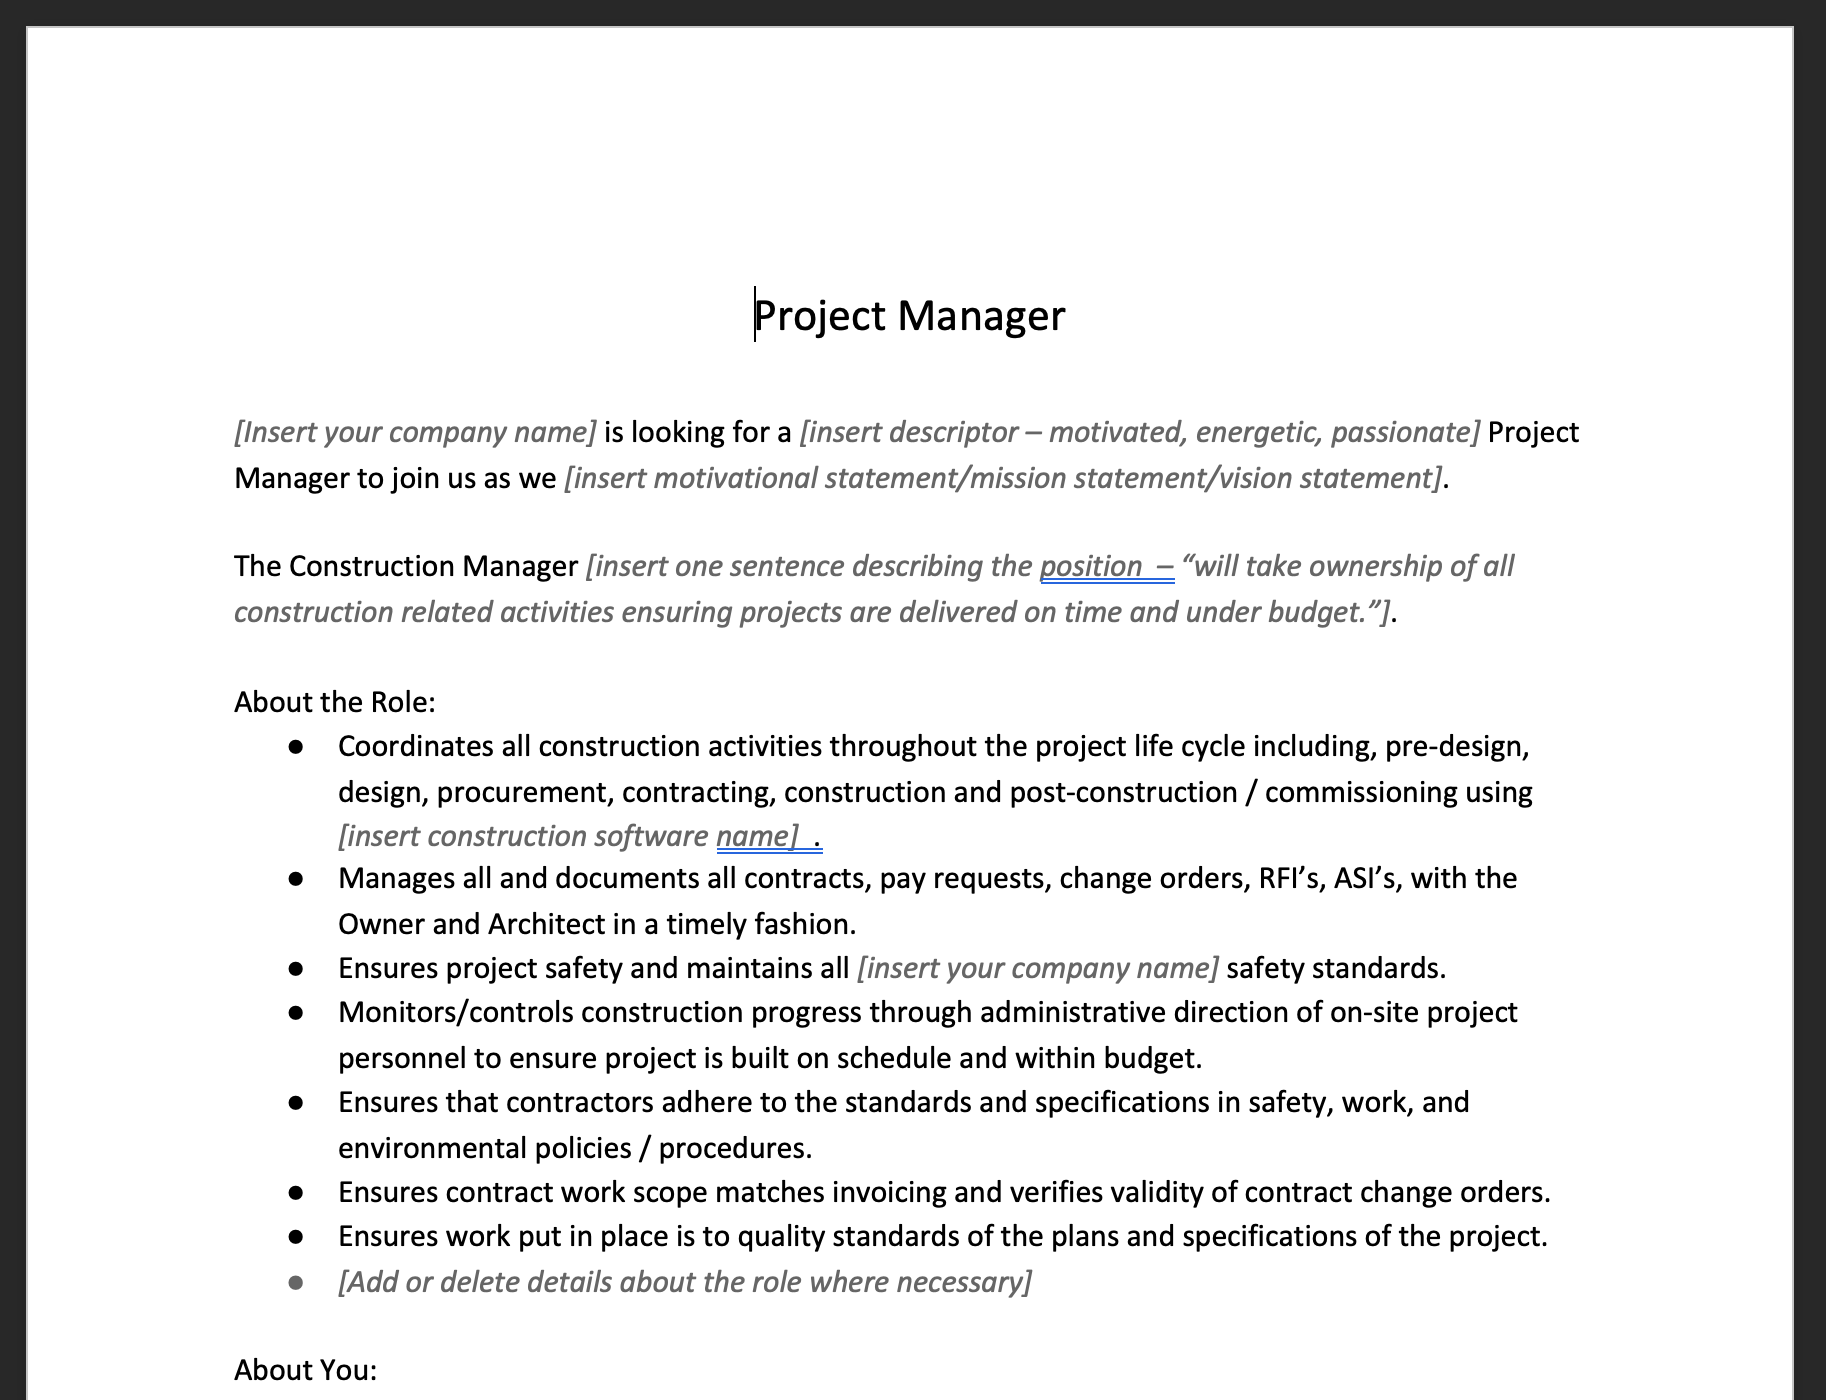 Project Manager Job Description